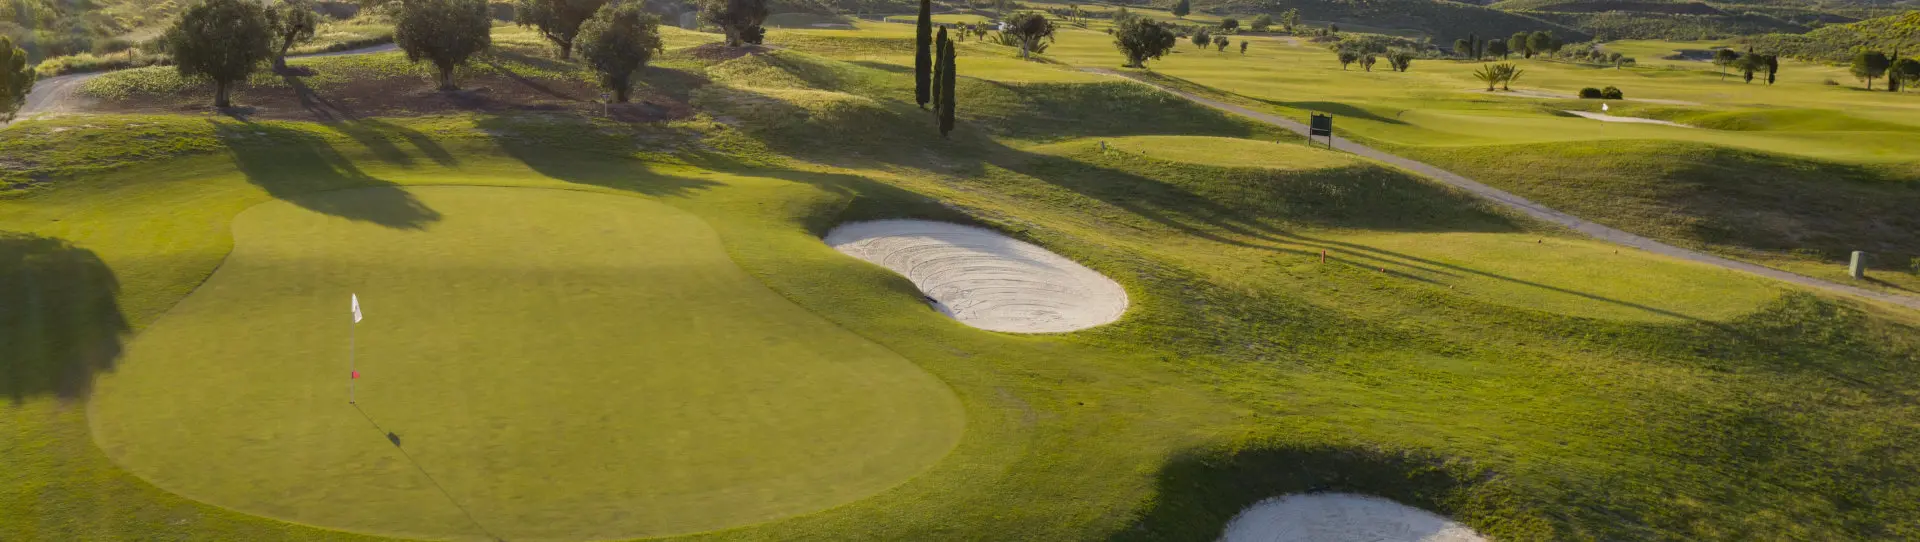 Spain golf courses - Lorca Golf Course - Photo 2